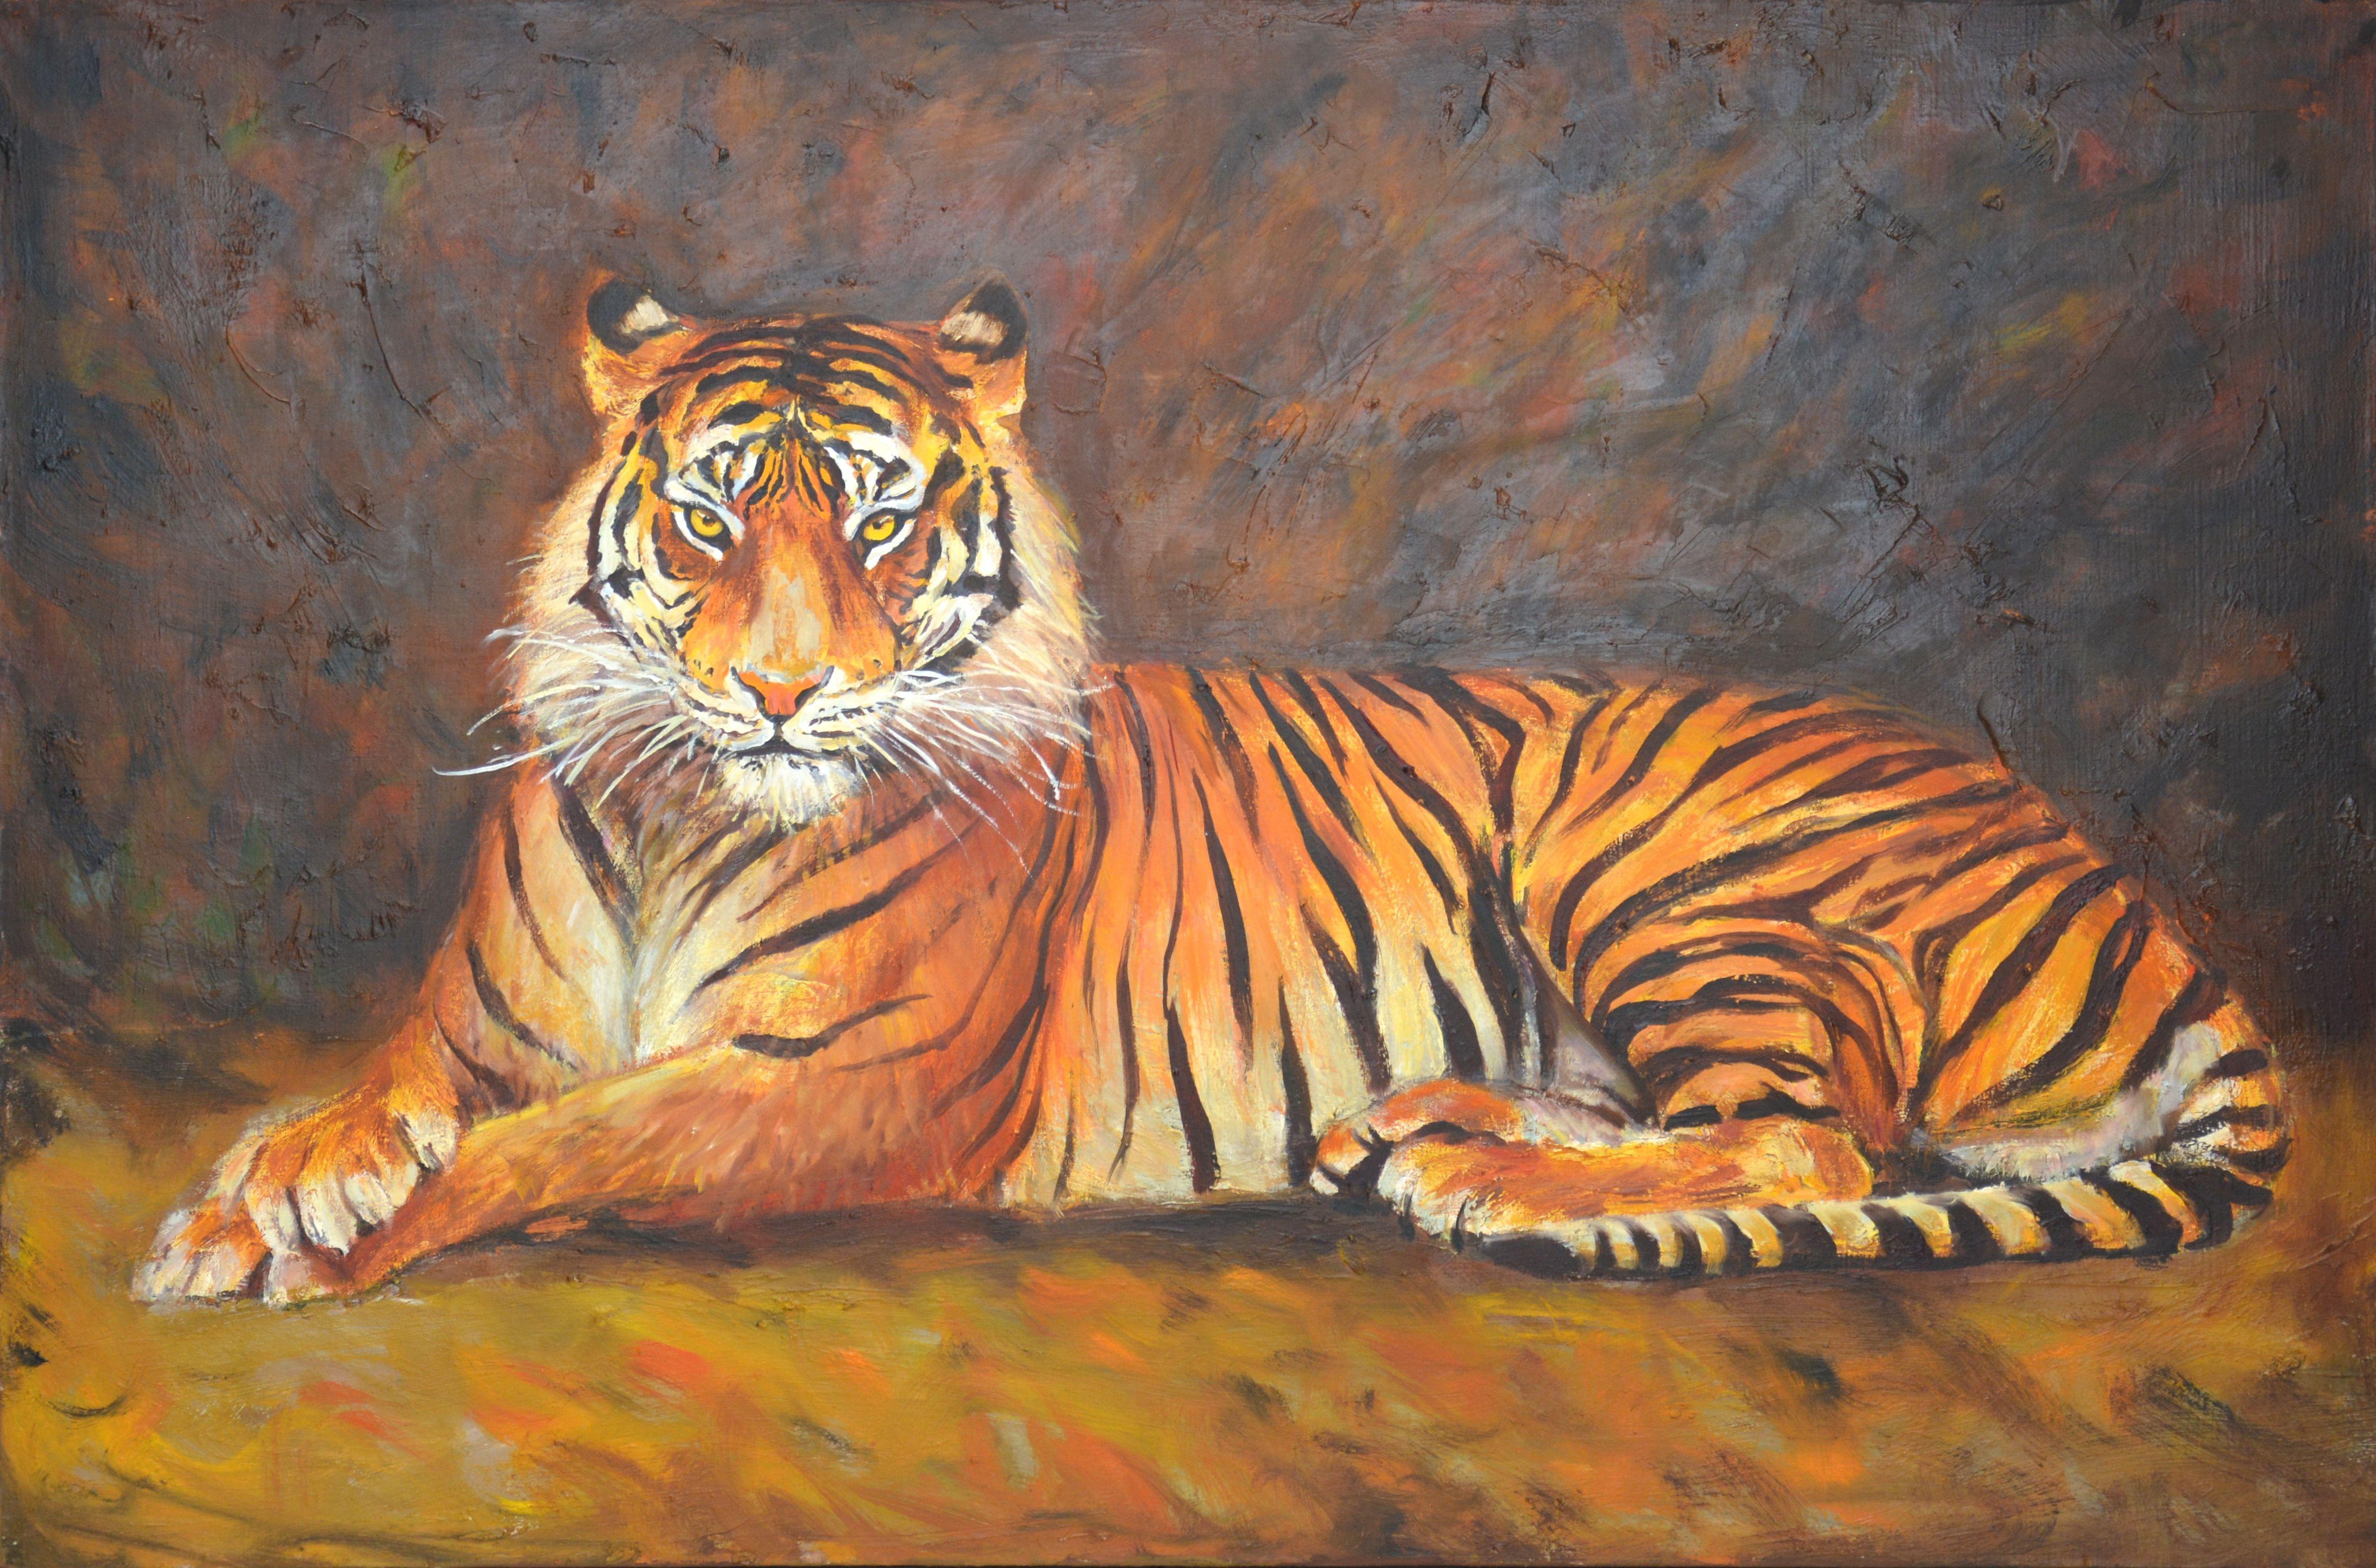 Animal Painting Iryna Kastsova - Tigre, peinture, huile sur toile